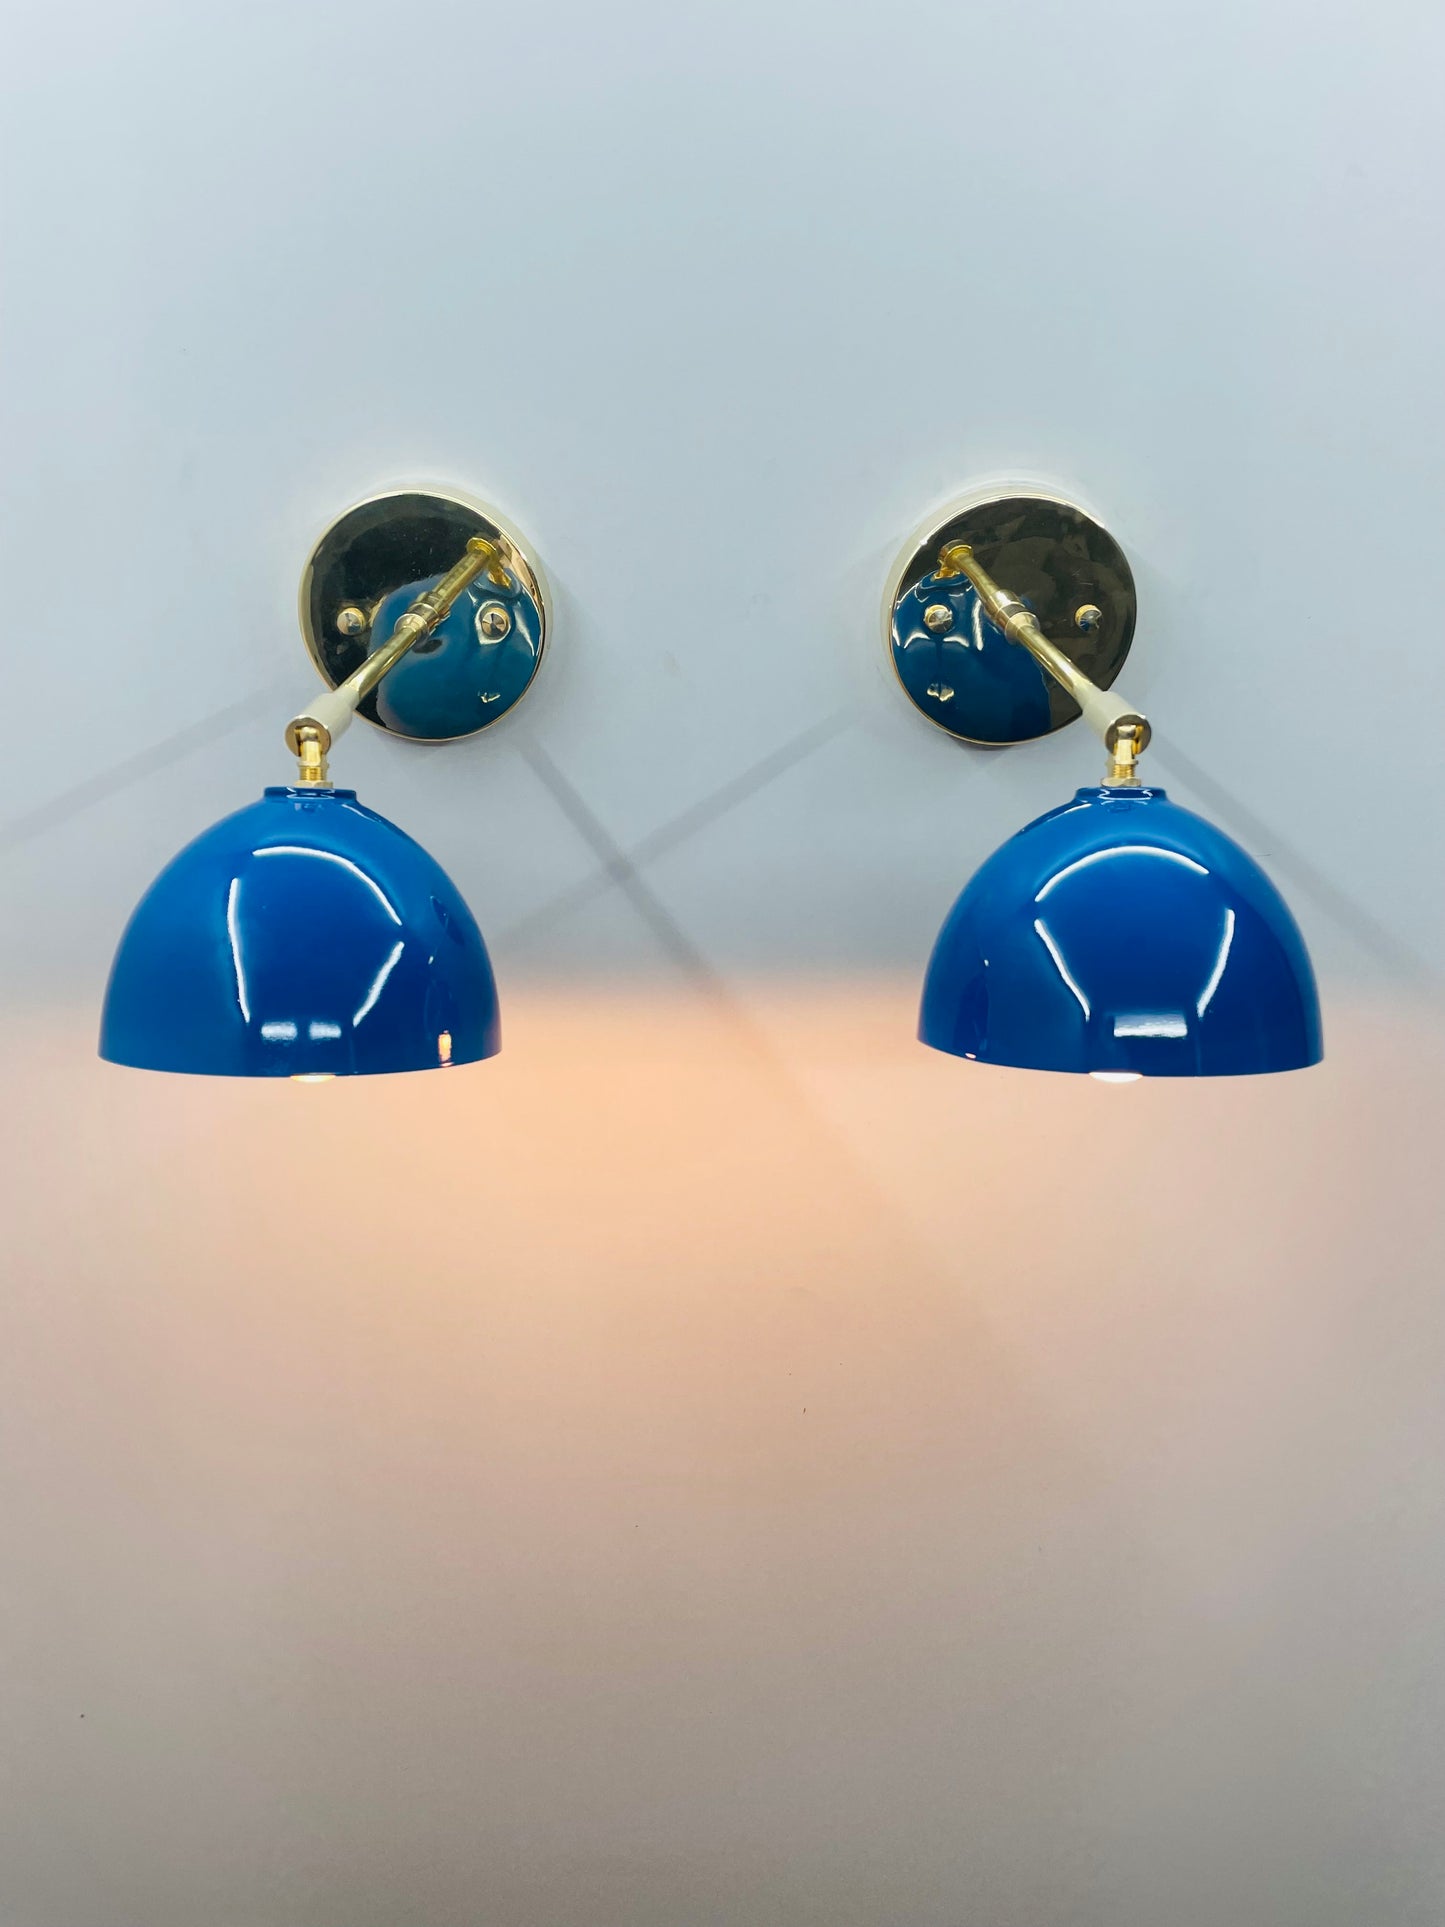 Pair of Modern Wall Sconce Lamps - Vintage-Inspired Design - Bedside Lighting